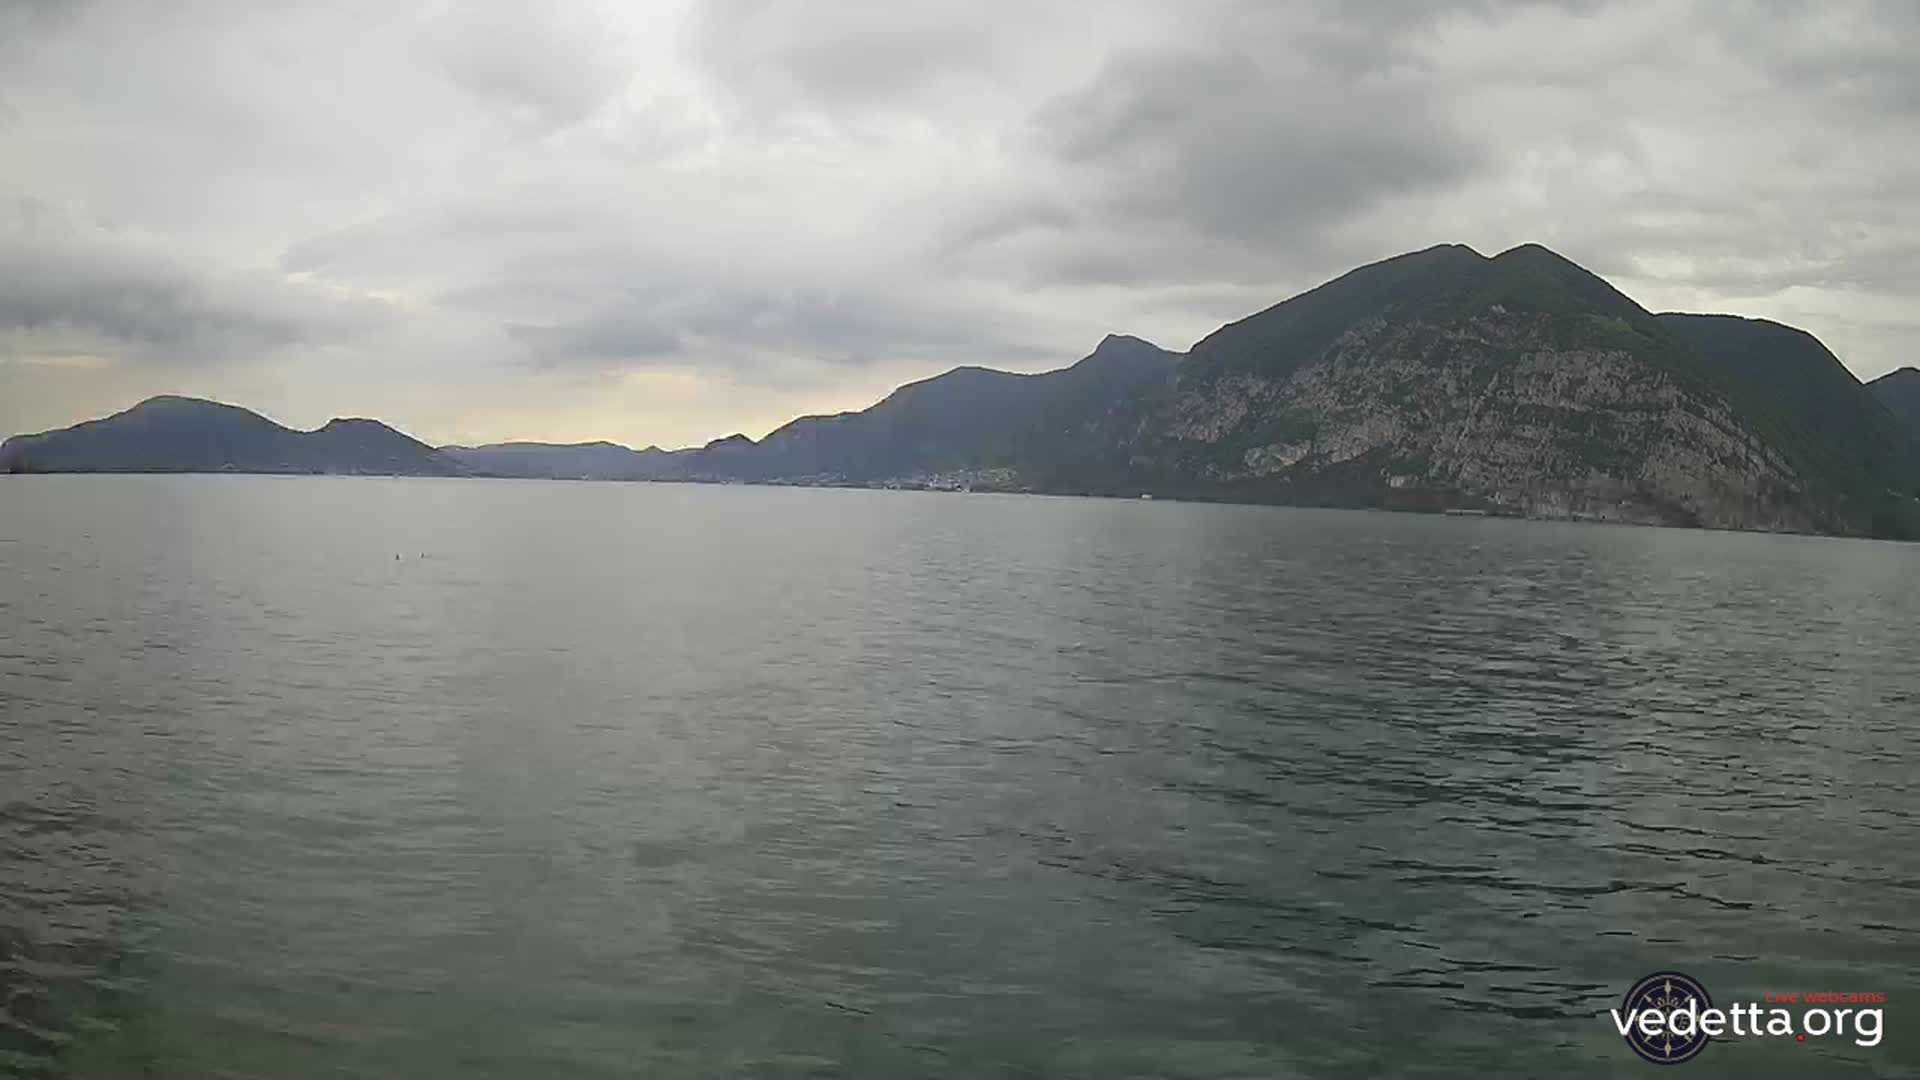 Webkamera - Lago d'Iseo